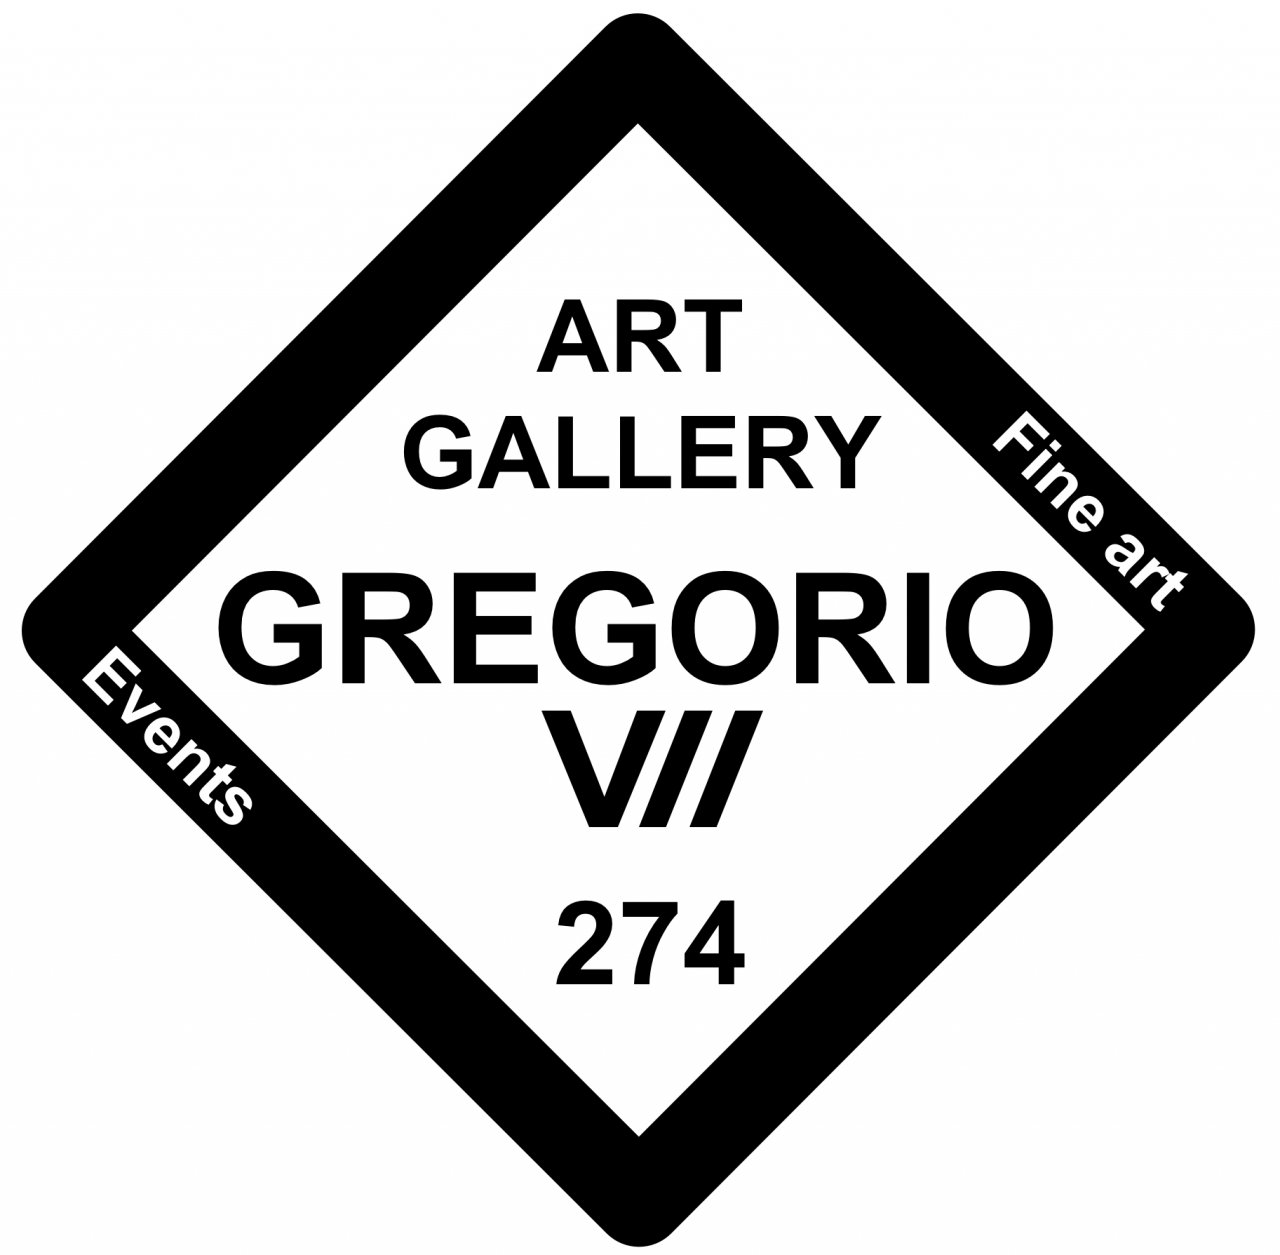 Art Gallery Gregorio VII